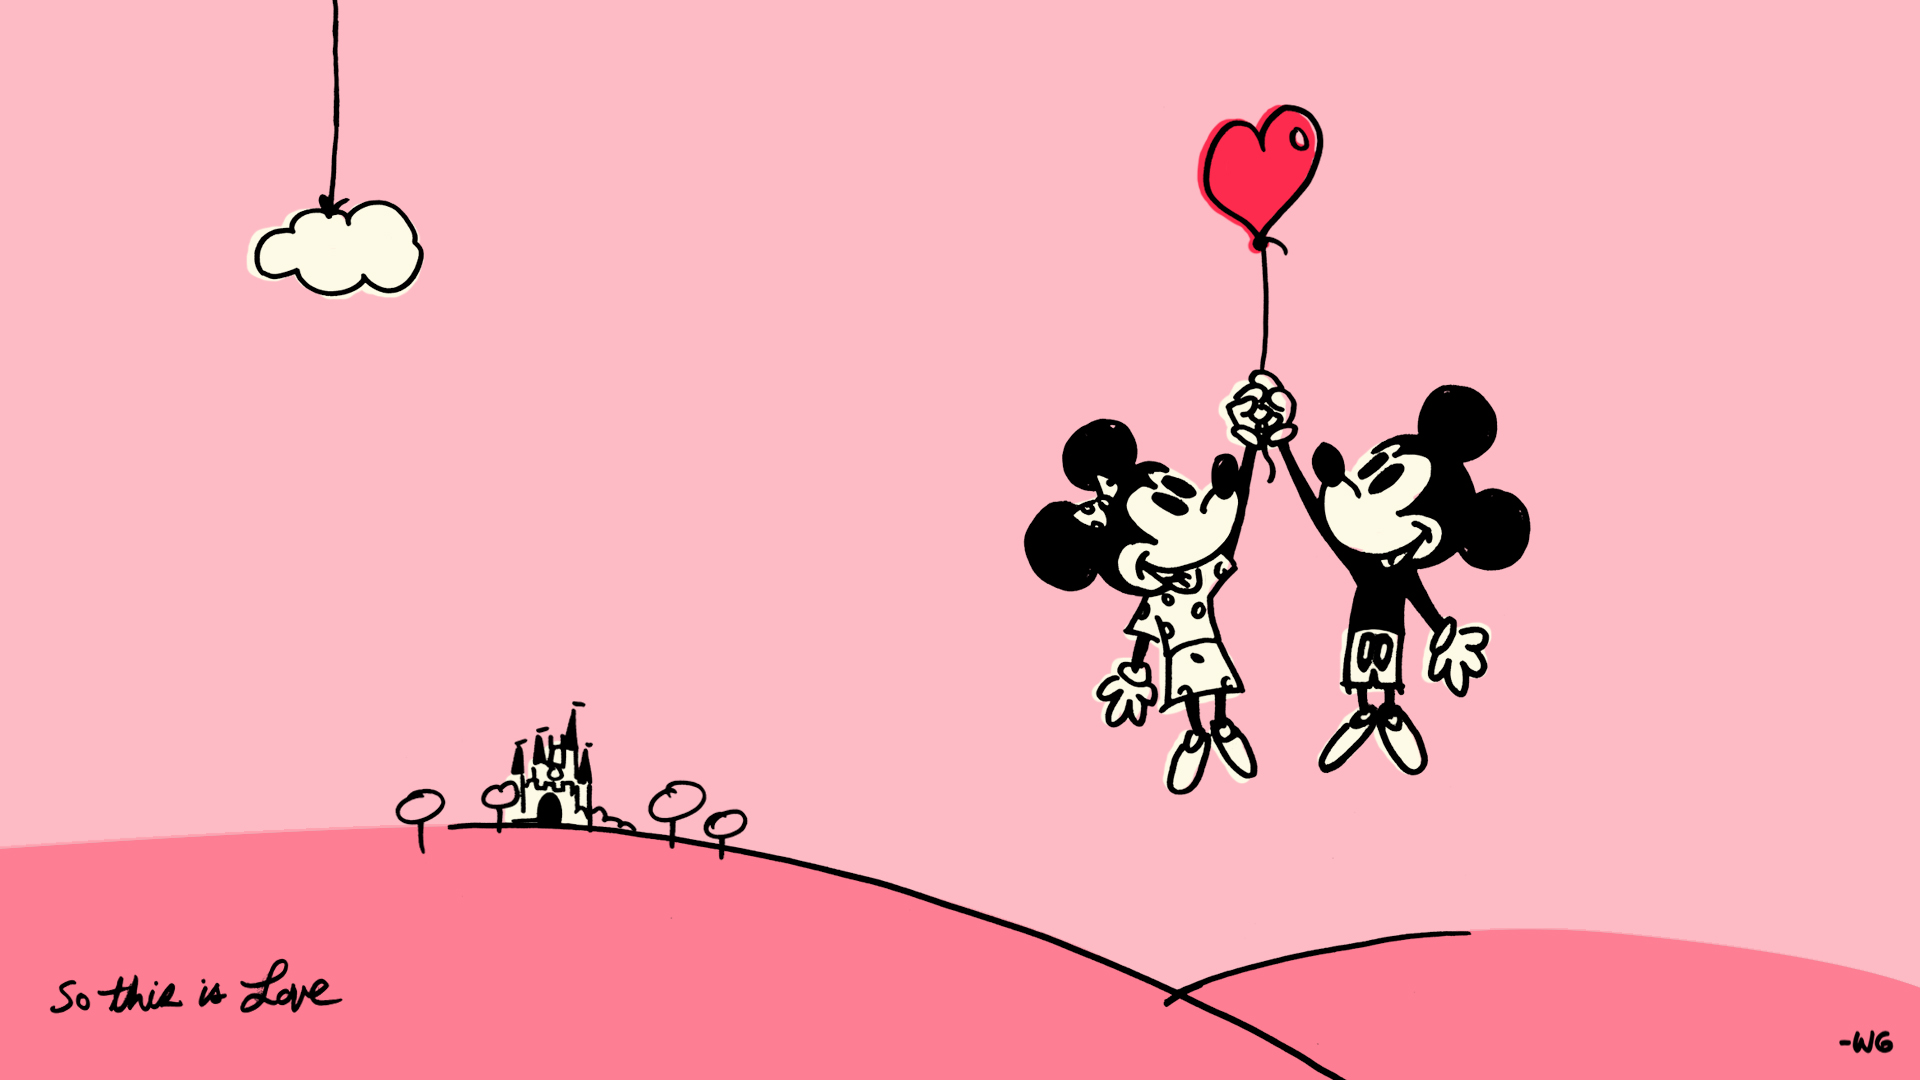 Free Disney Valentine Wallpaper